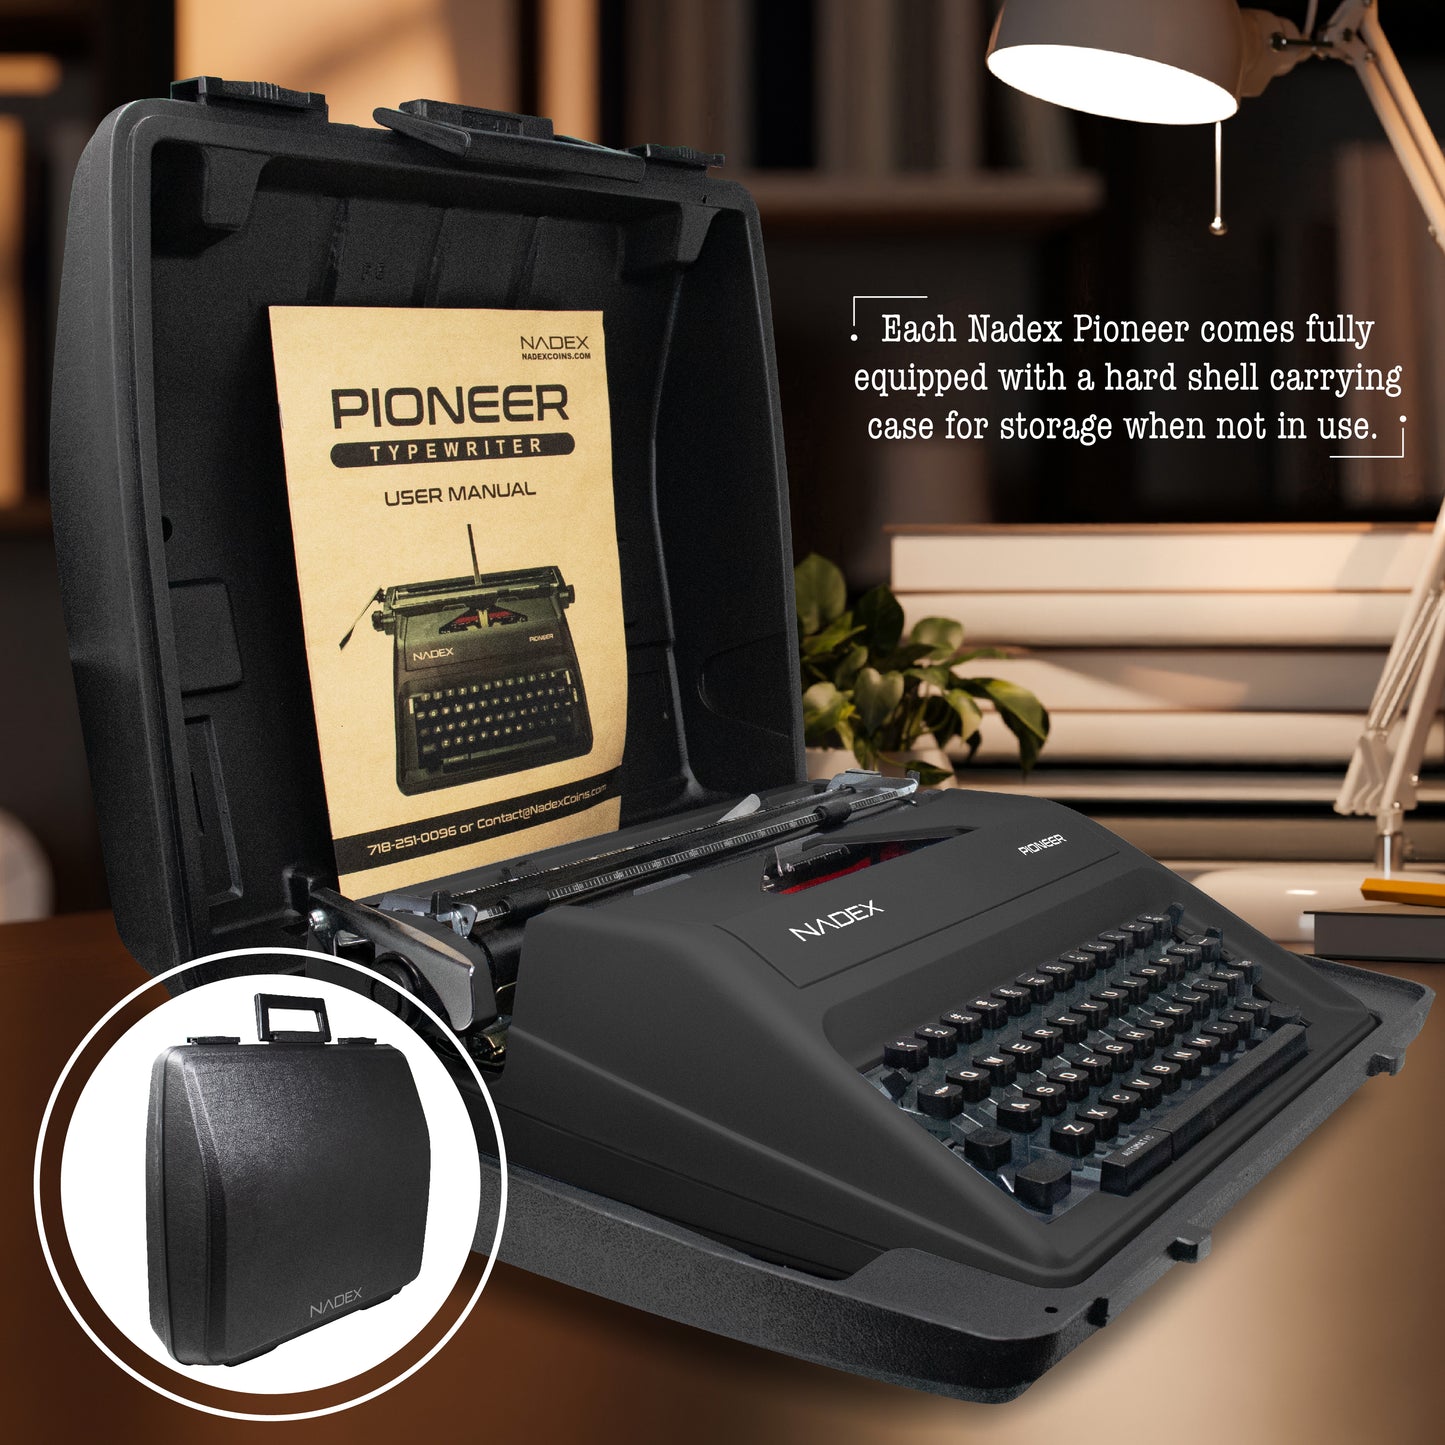 Nadex Pioneer Manual Typewriter, Durable Travel Case Included, Black